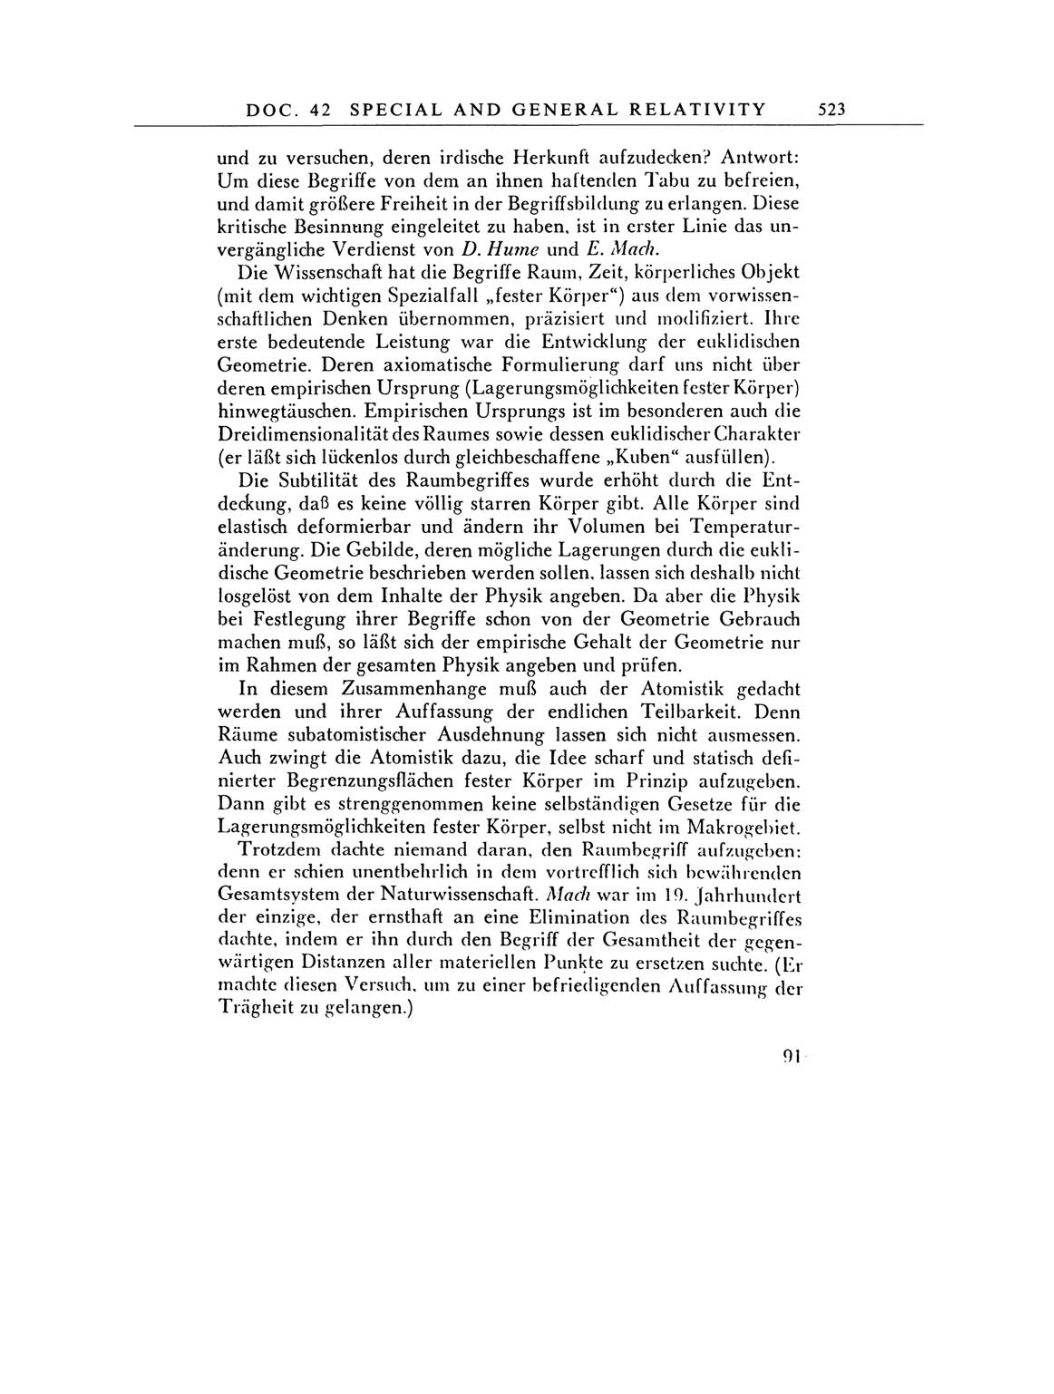 Volume 6: The Berlin Years: Writings, 1914-1917 page 523